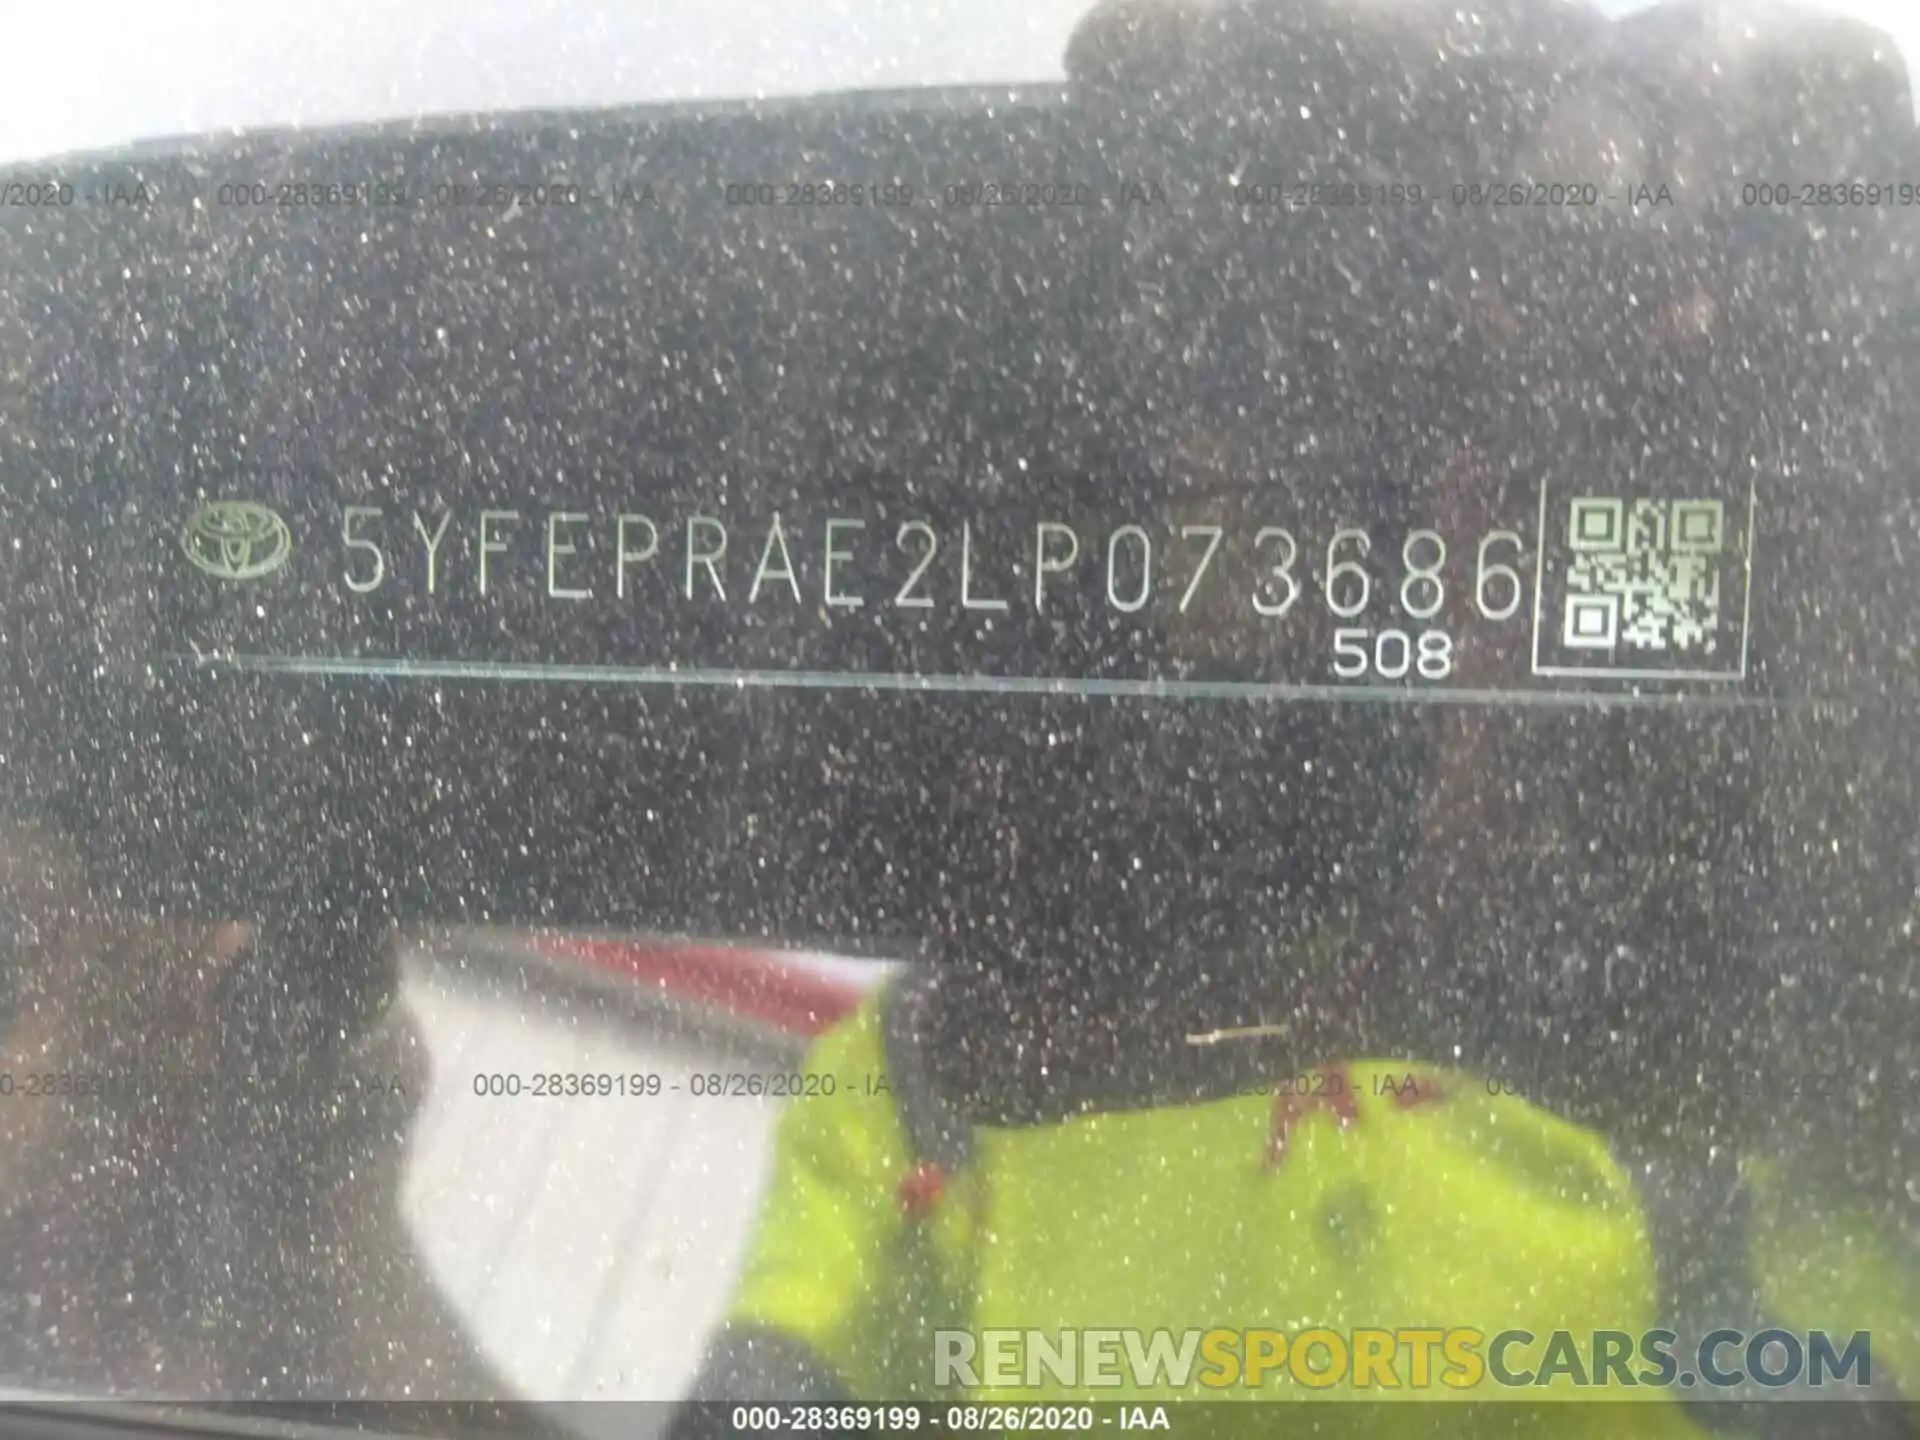 9 Photograph of a damaged car 5YFEPRAE2LP073686 TOYOTA COROLLA 2020